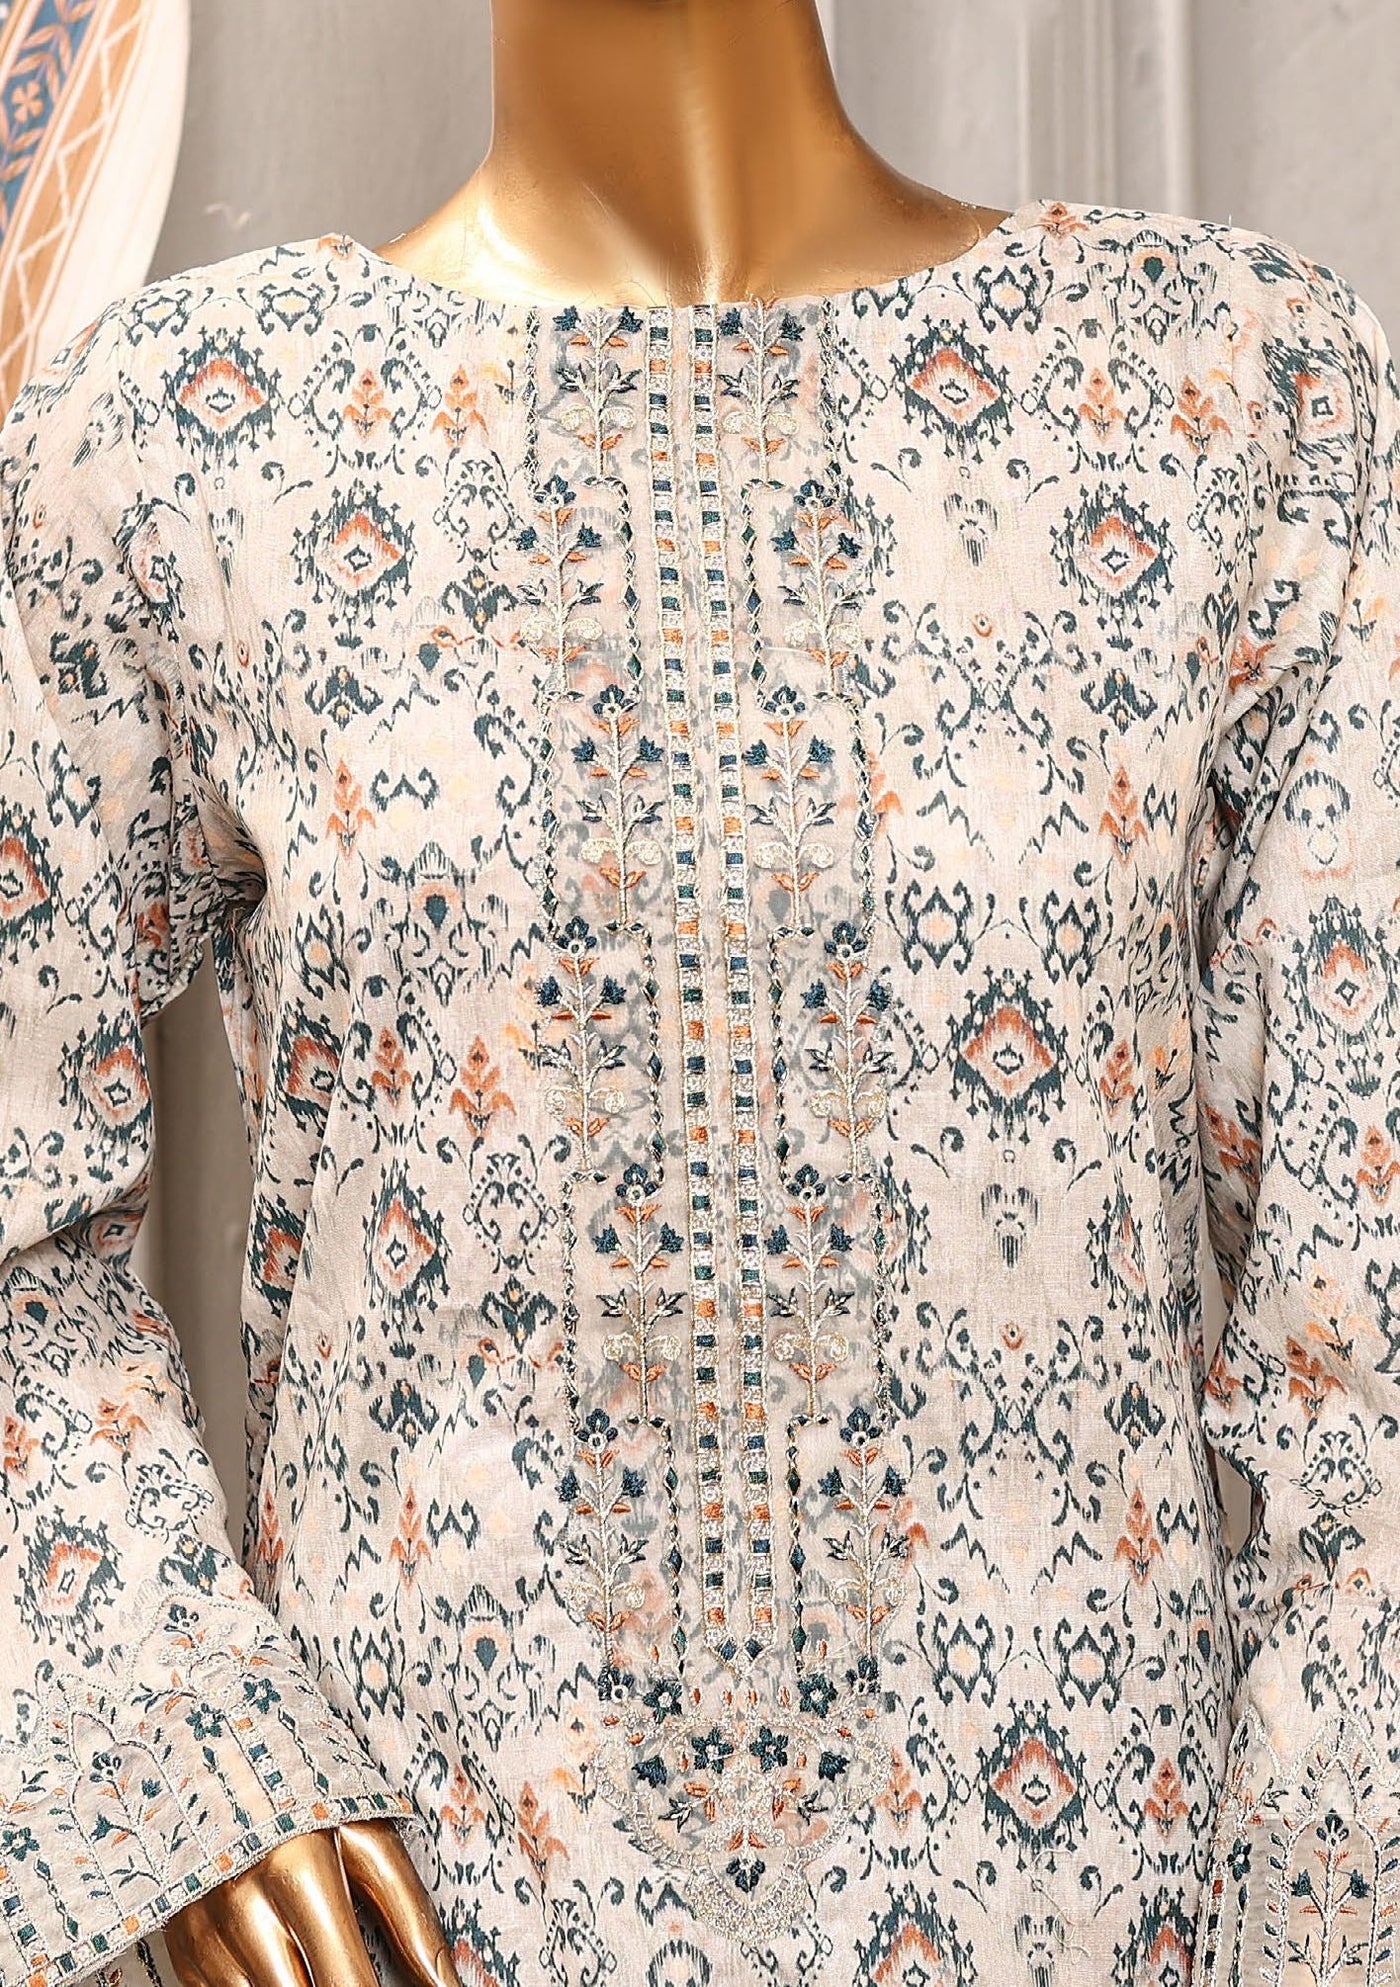 Bin Saeed Ready Made Embroidered Cotton Dress - db24494